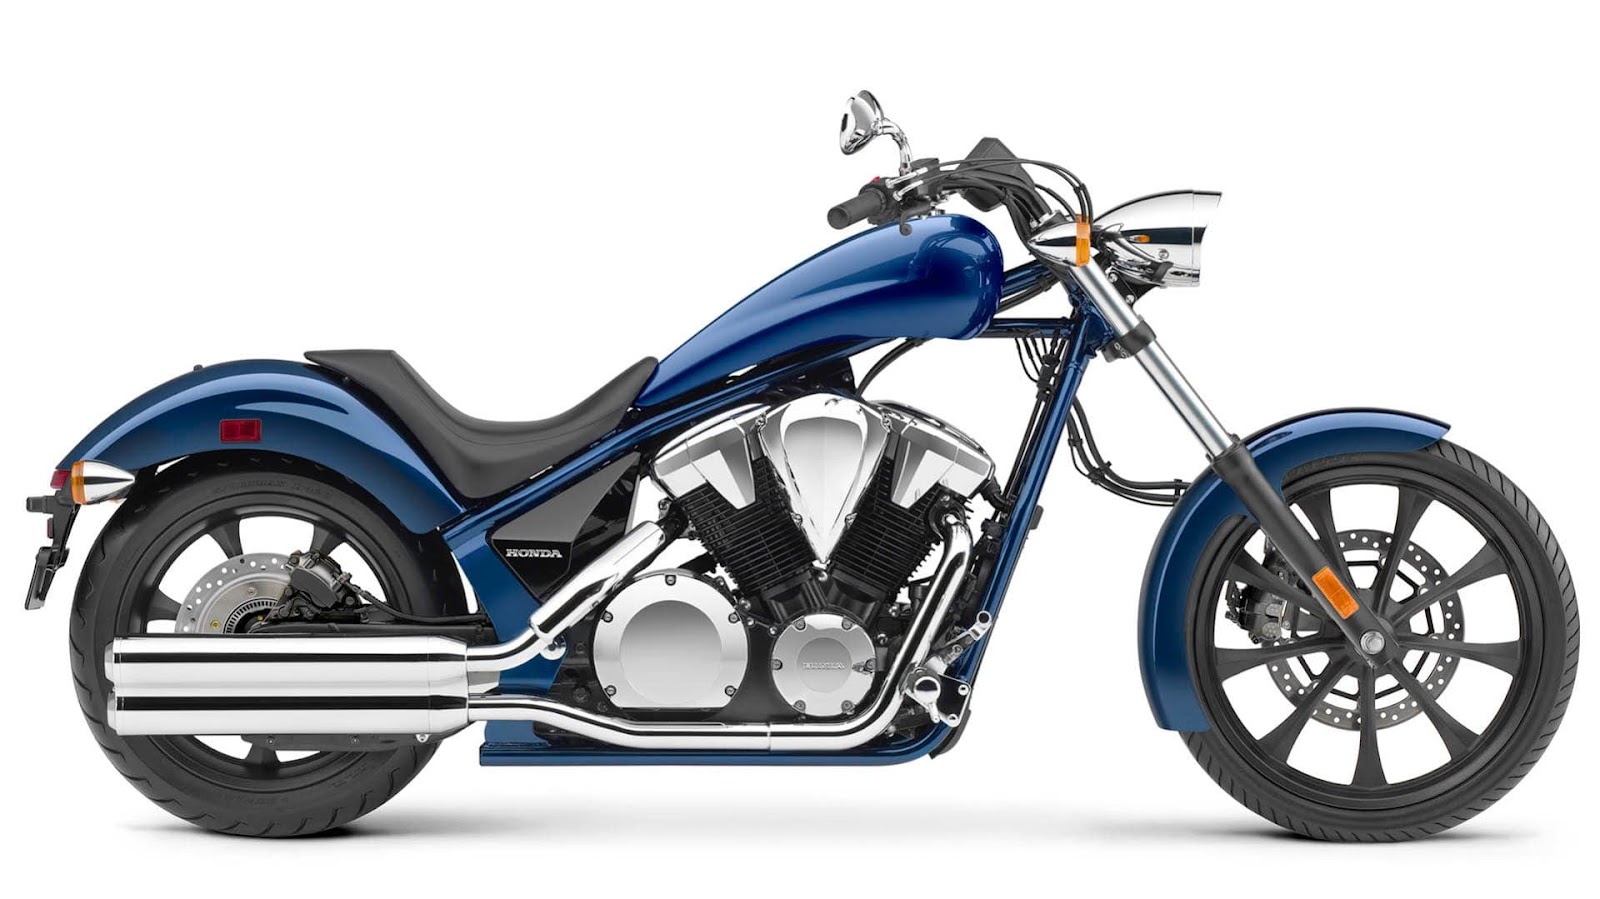 Honda Fury chopper-style motorcycle - sleek and stylish bike with a powerful V-twin engine